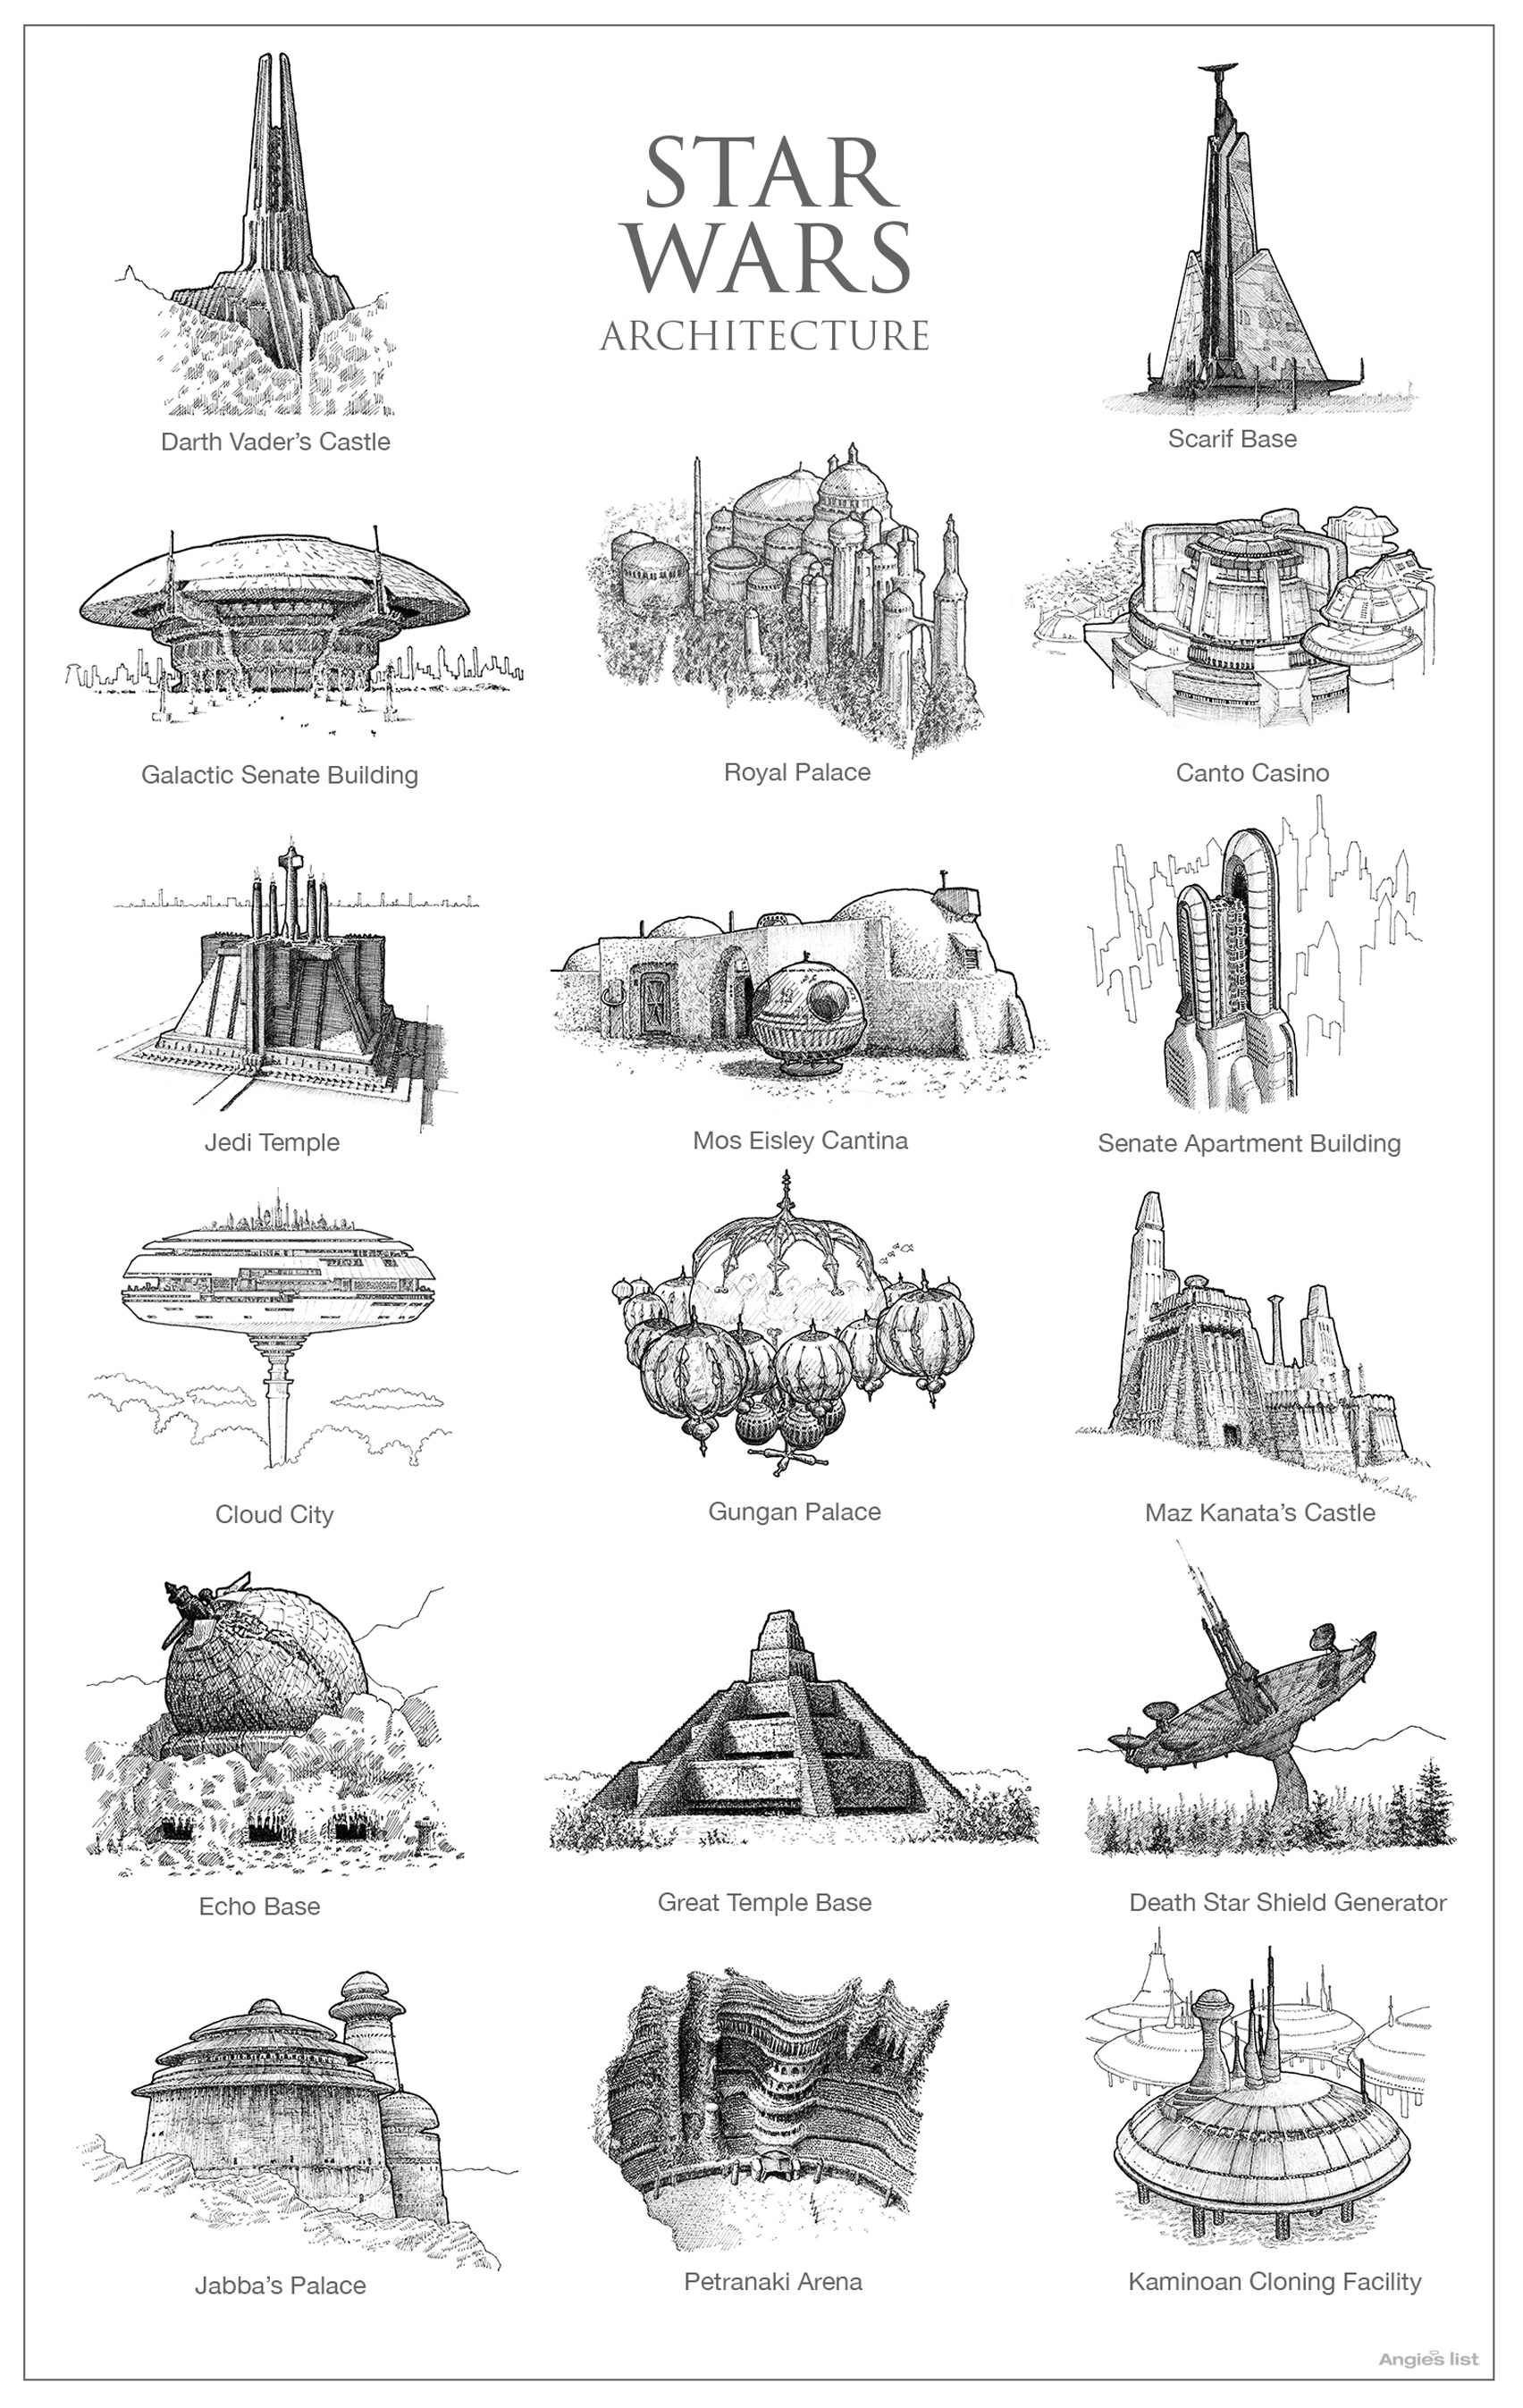 Star Wars architecture illustrations